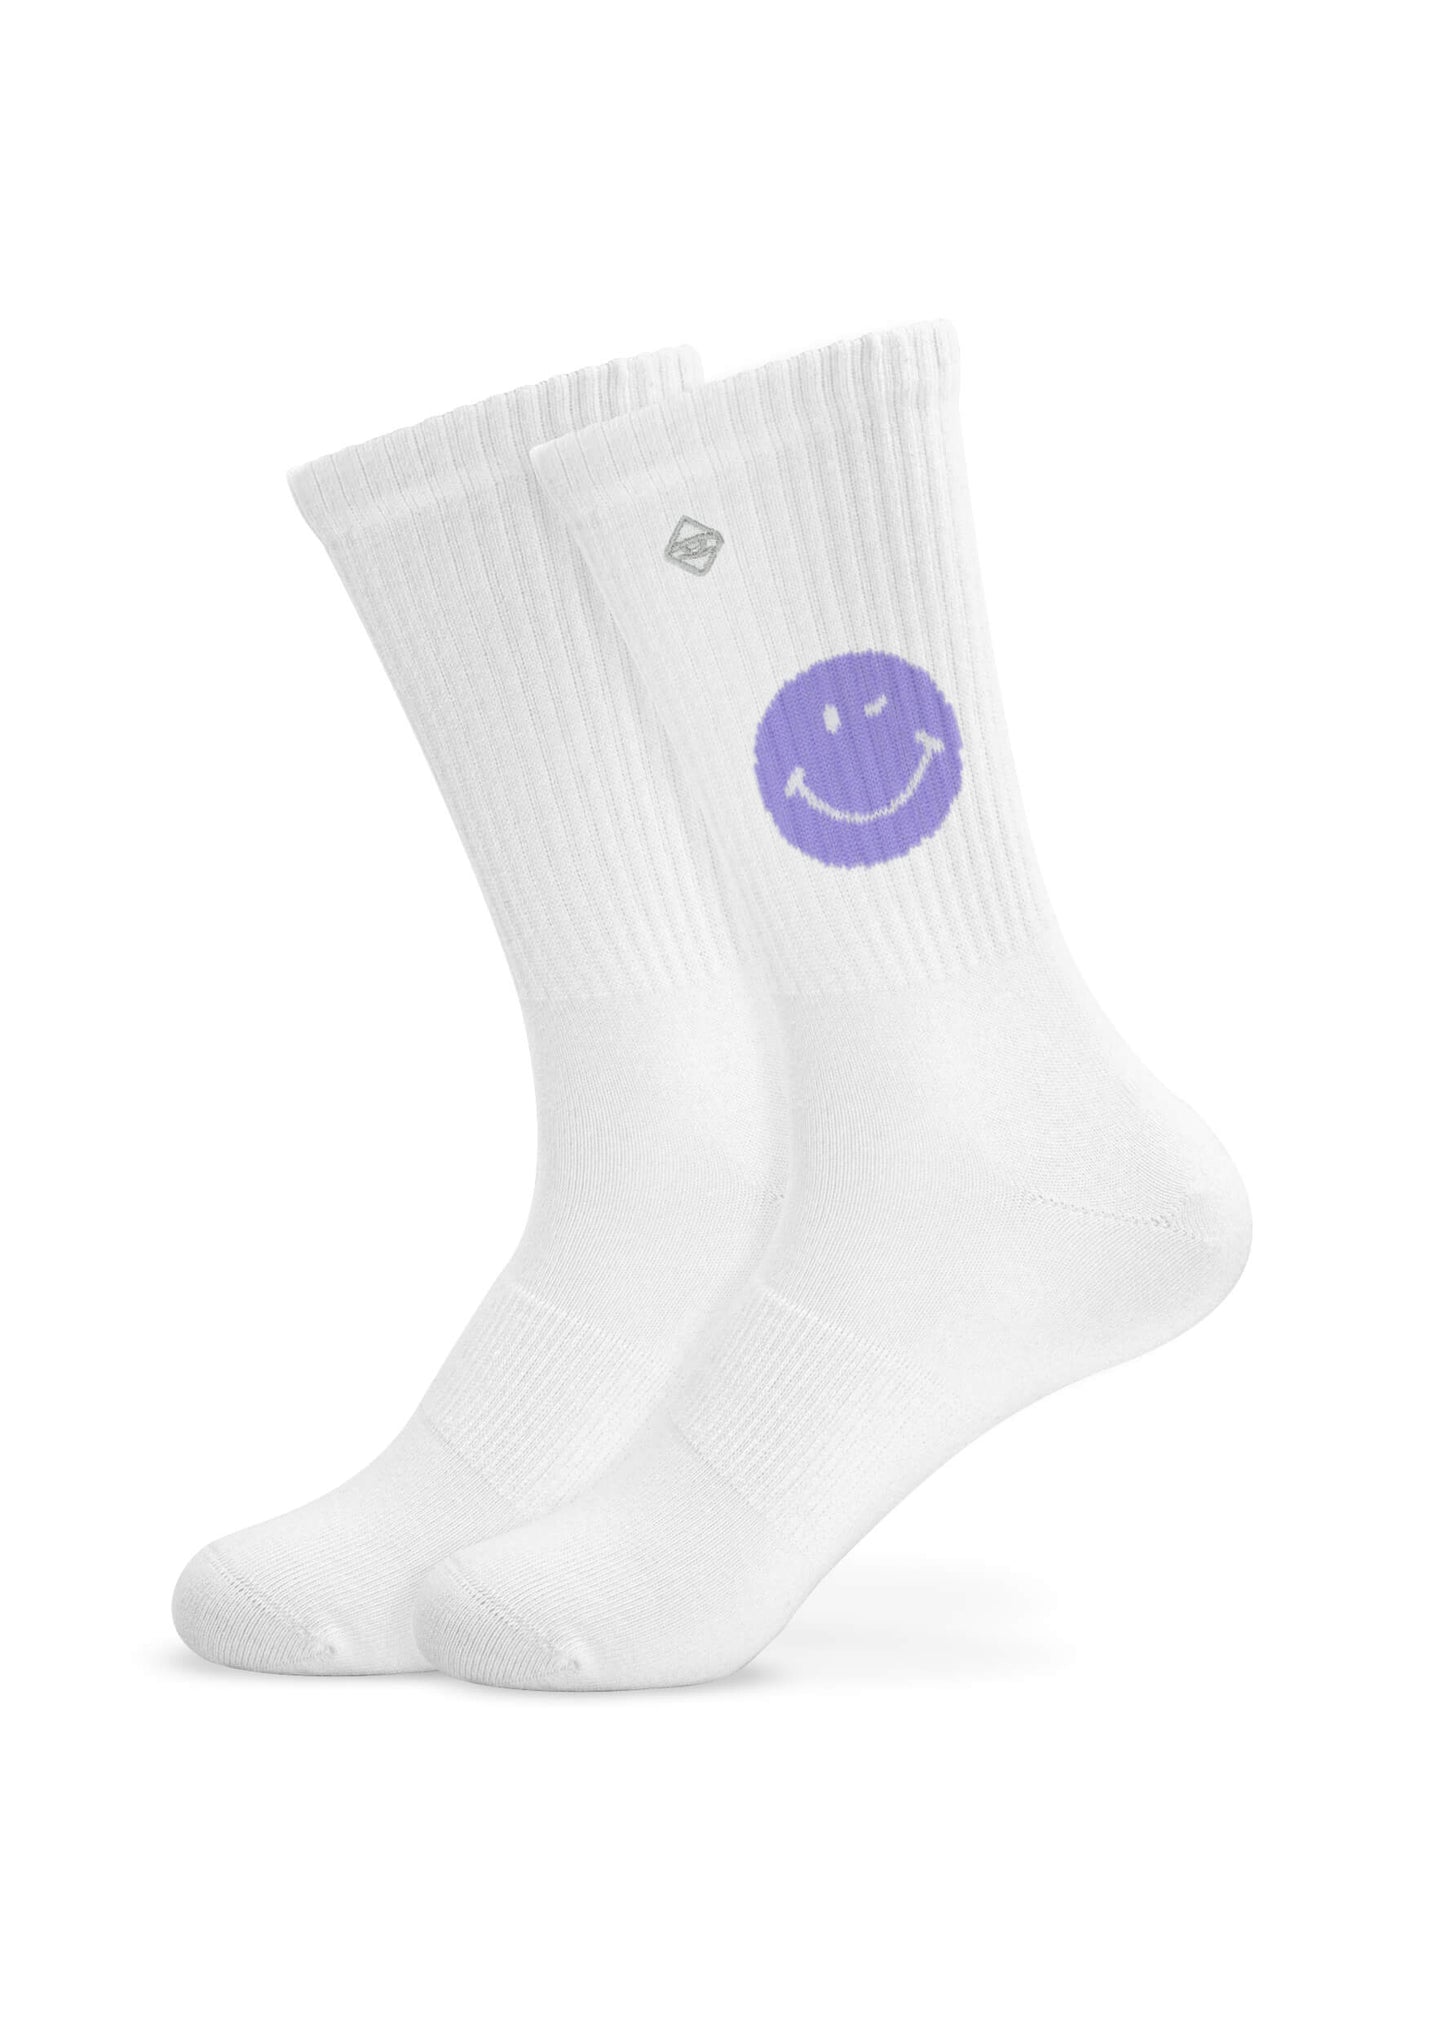 Socken mit lila Smiley